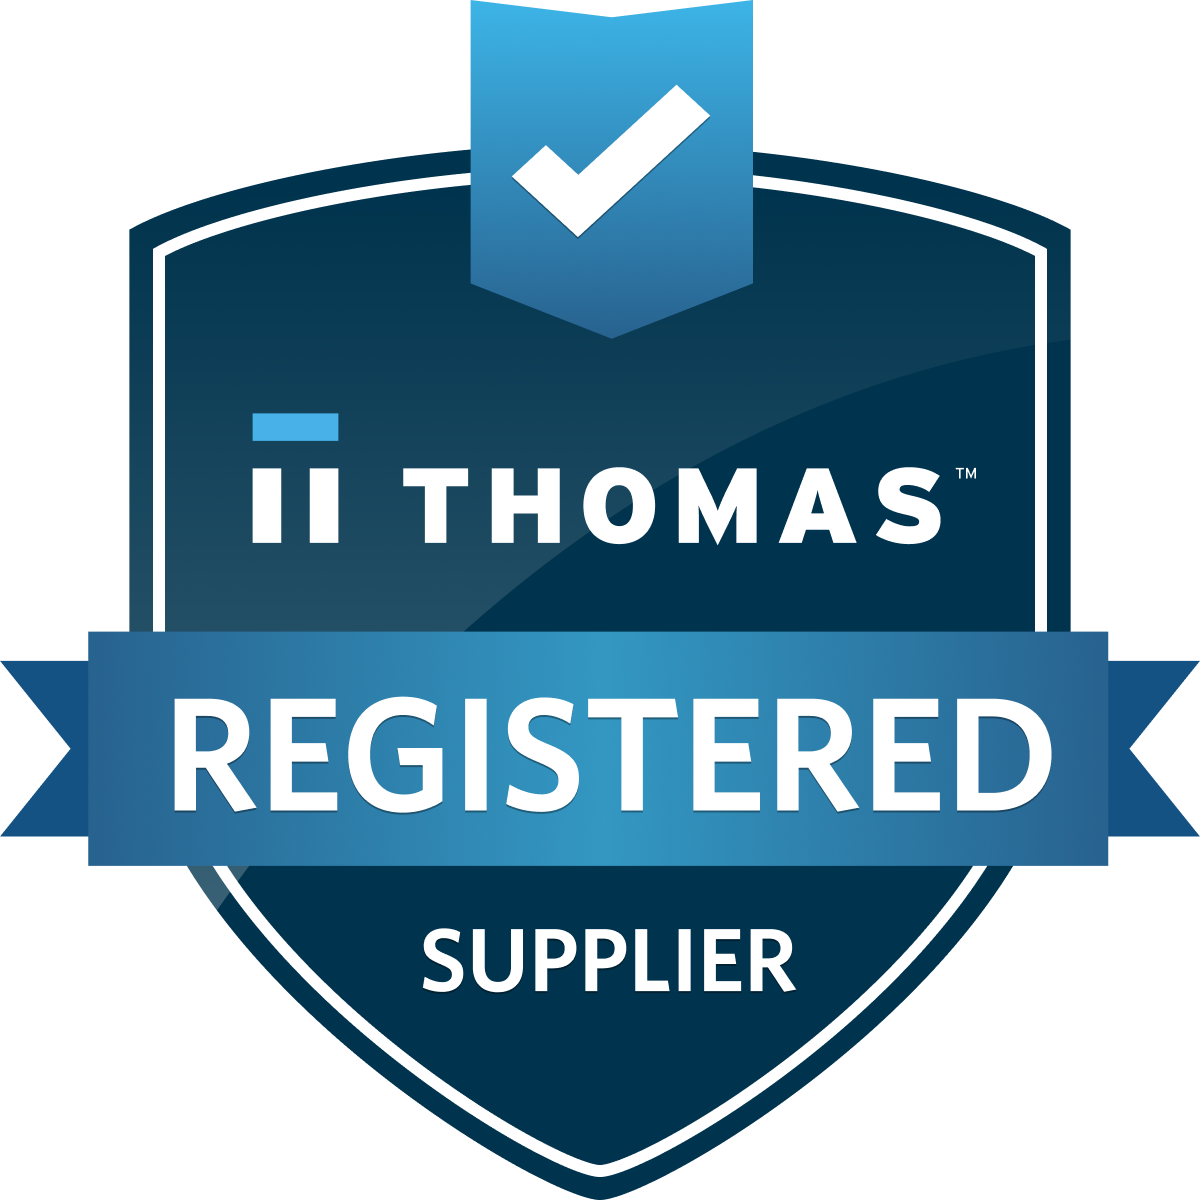 Thomas Registered Supplier Certification